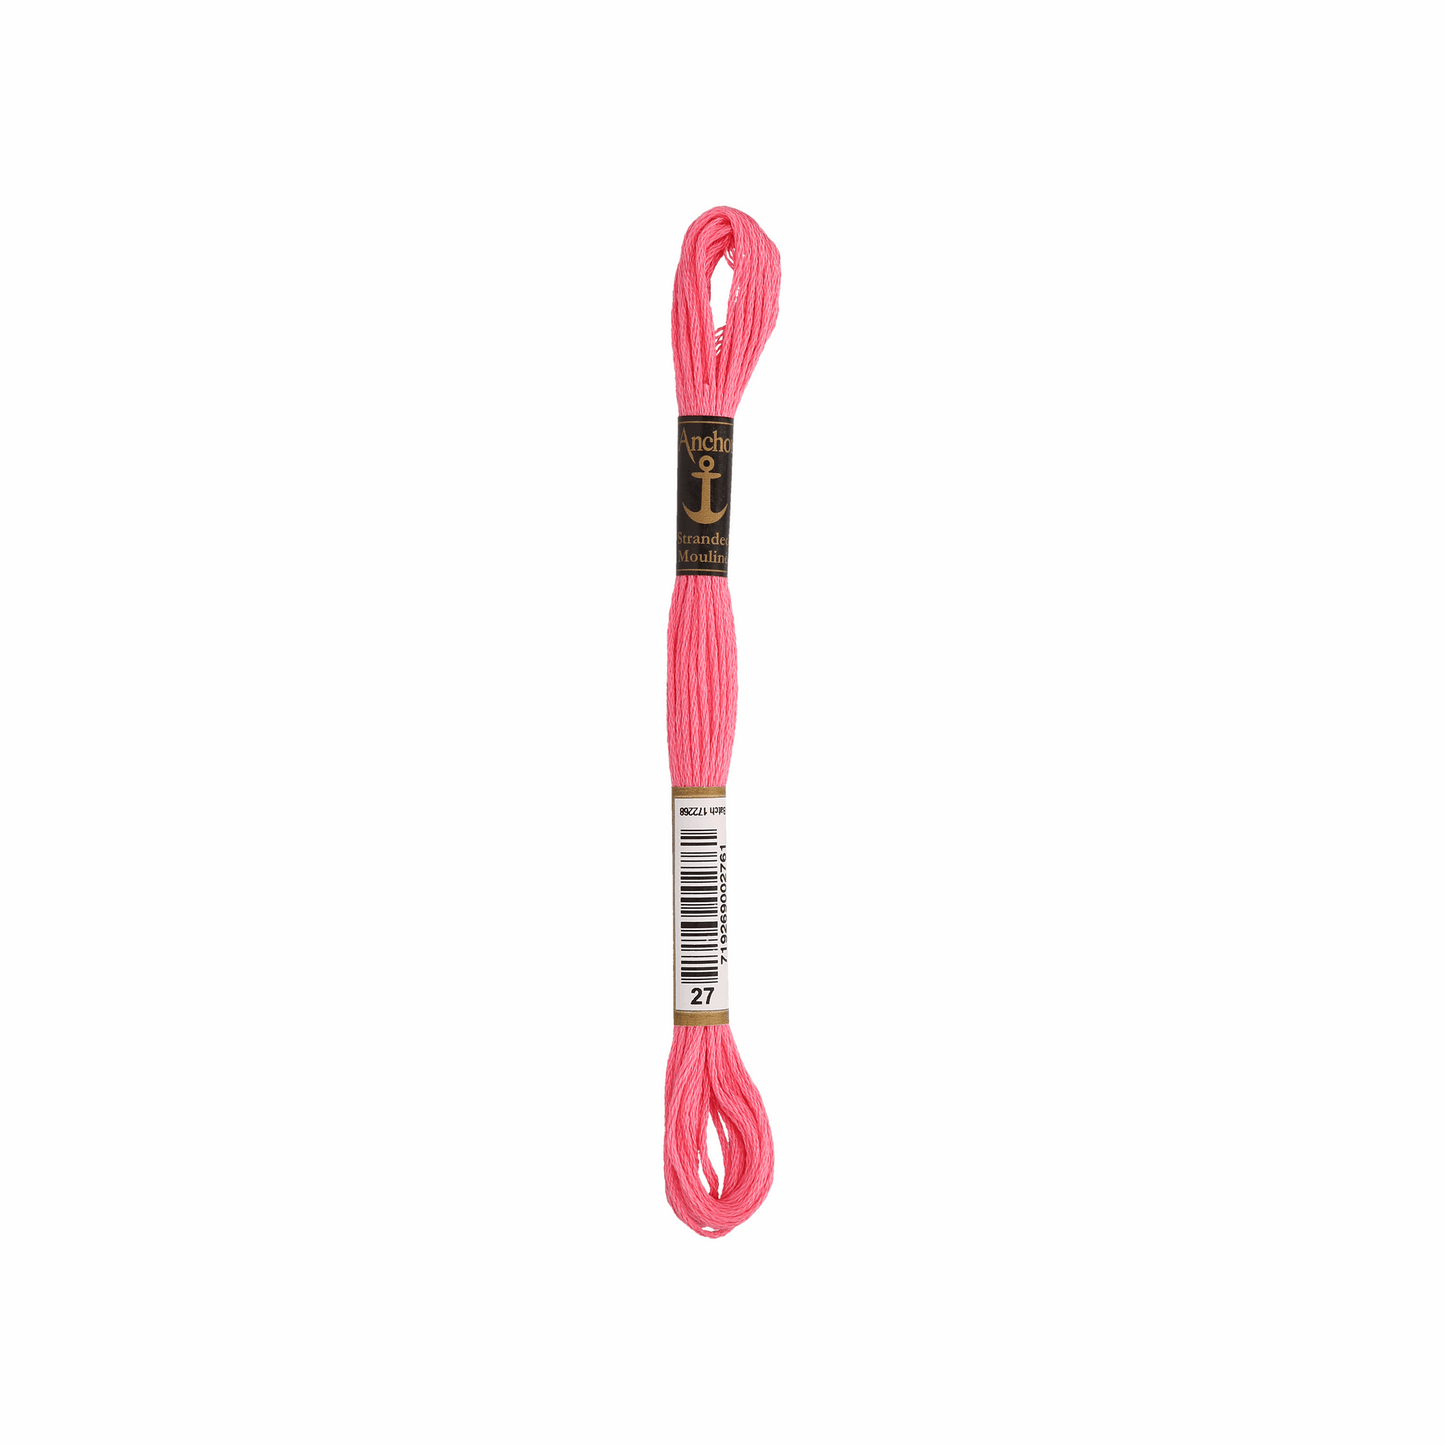 Anchor Sticktwist, 2g, Farbe 27 rosa